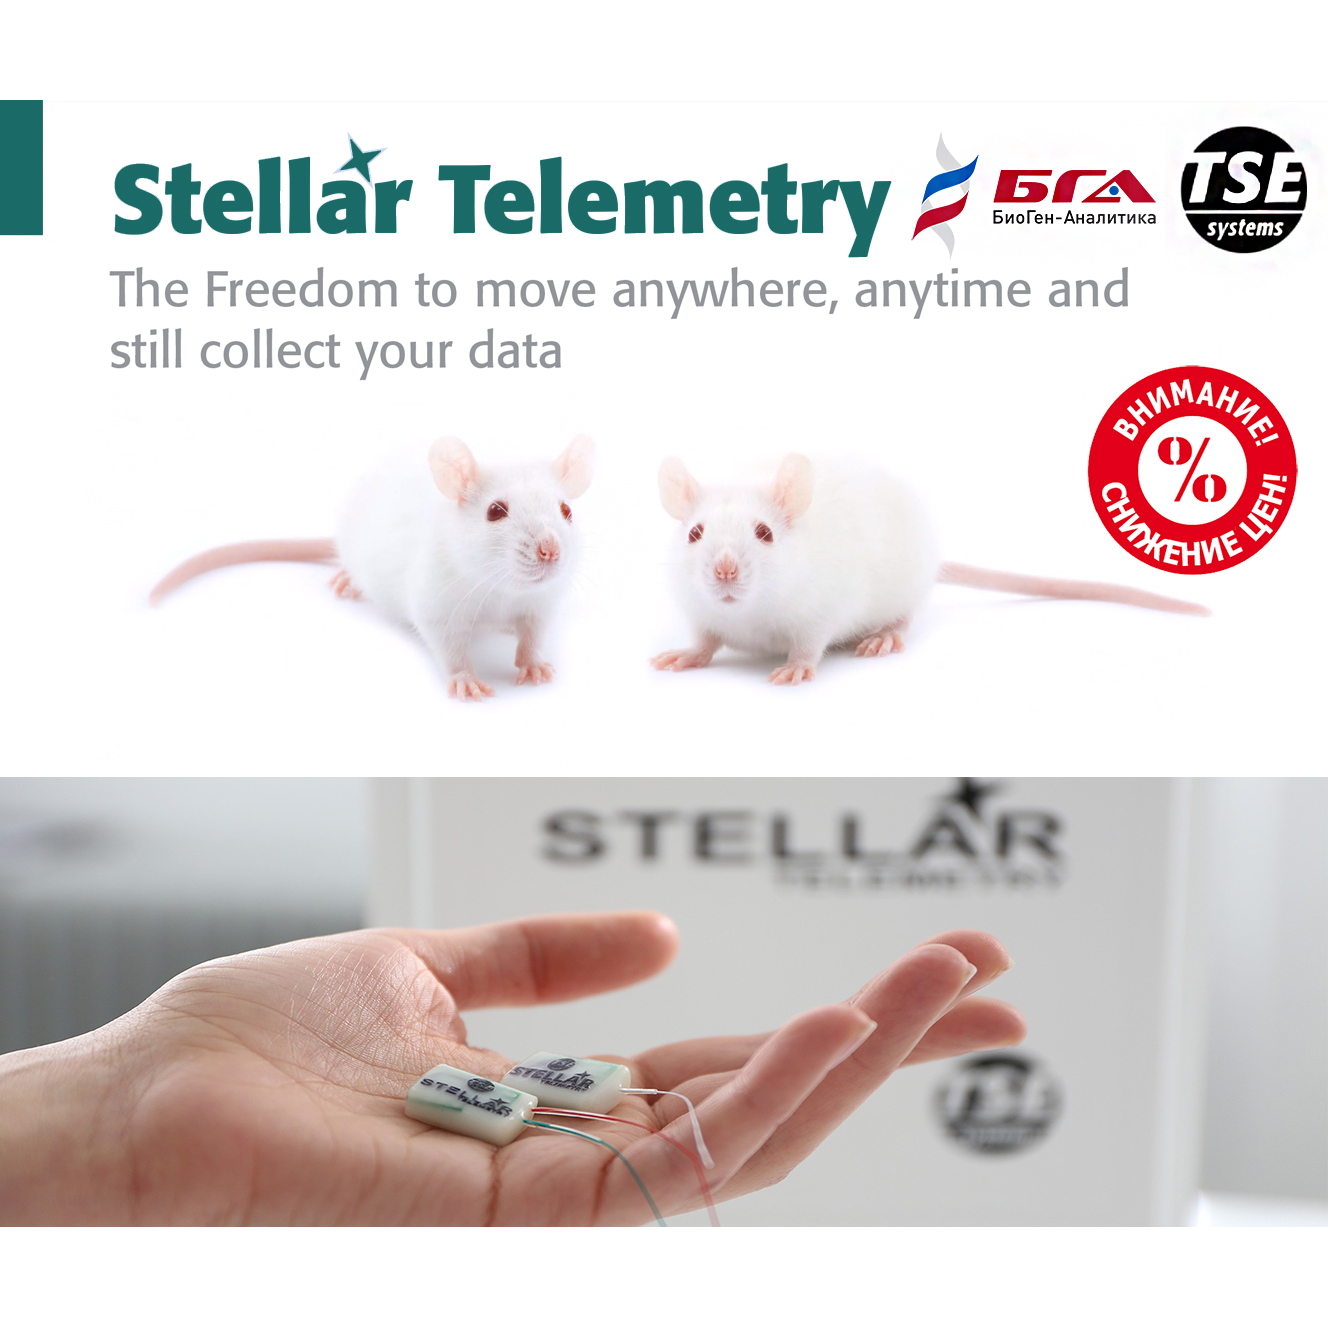  !   Stellar Telemetry  TSE Systems ().